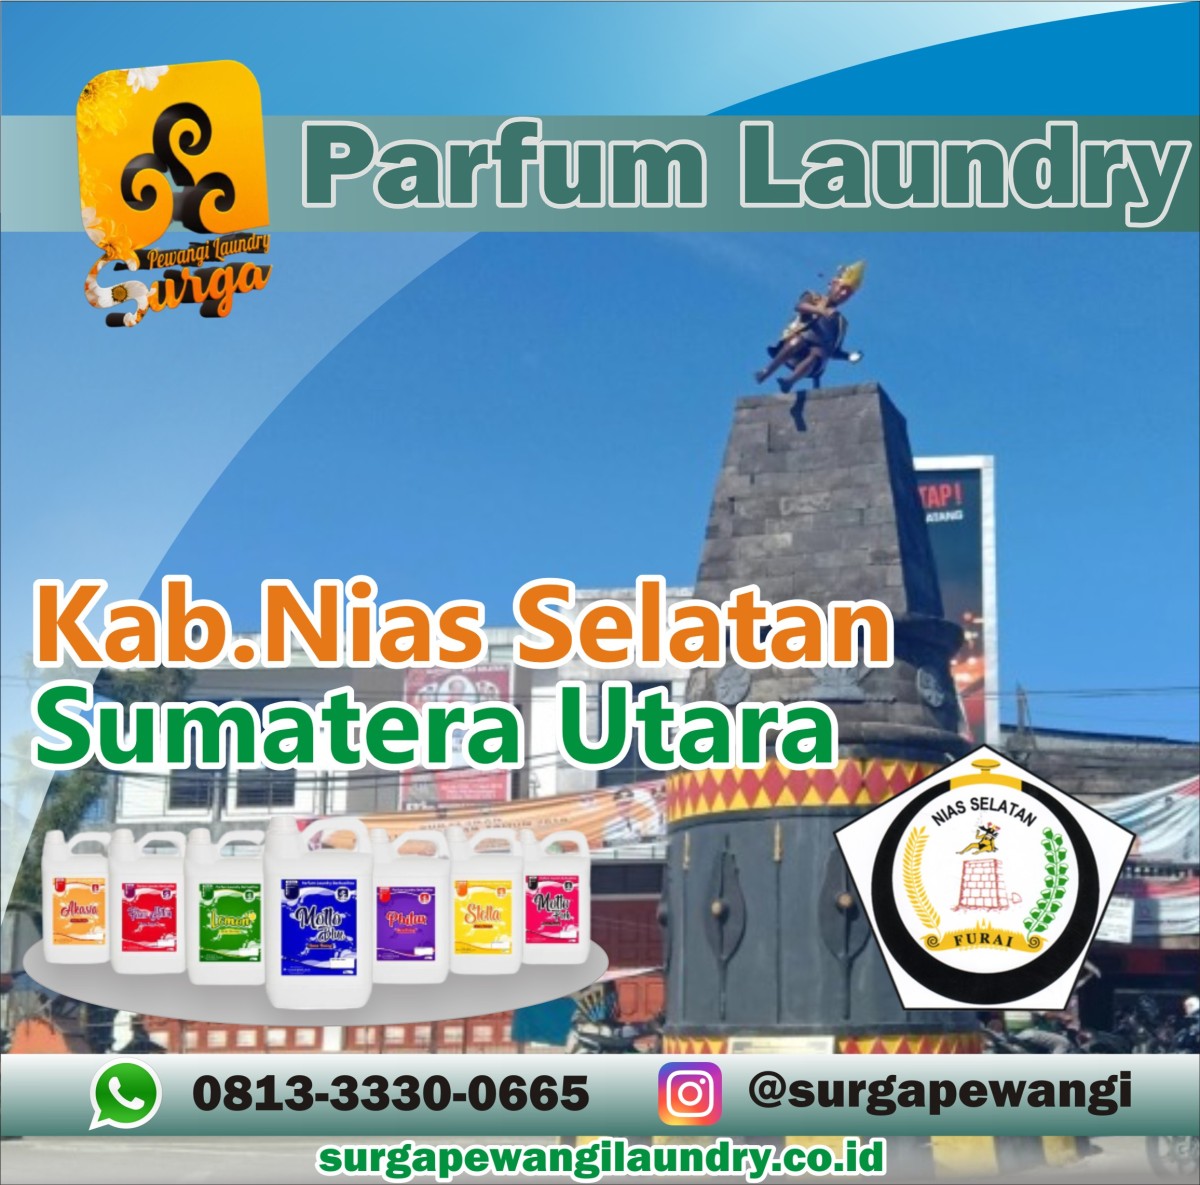 Parfum Laundry Kabupaten Nias Selatan, Sumatera Utara